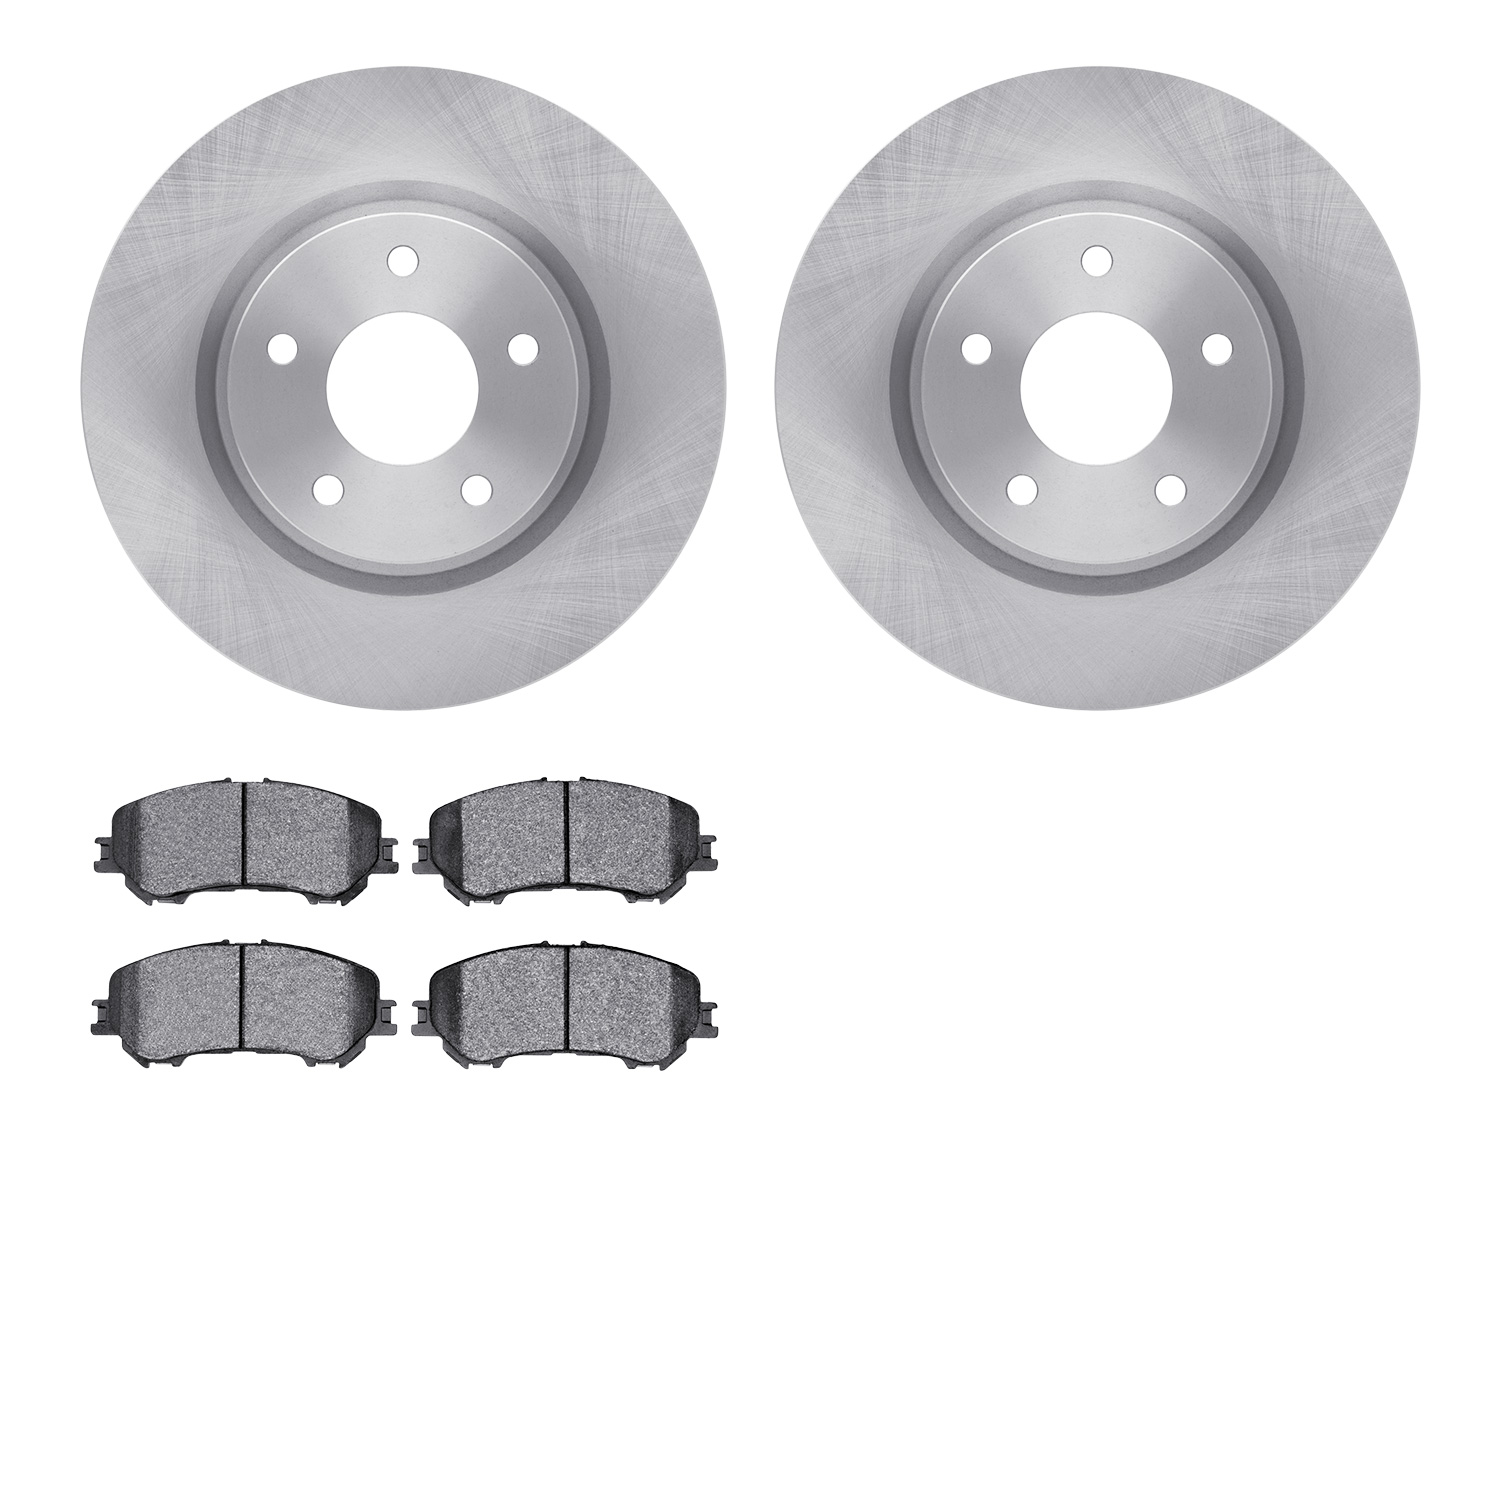 6502-67529 Brake Rotors w/5000 Advanced Brake Pads Kit, Fits Select Multiple Makes/Models, Position: Front